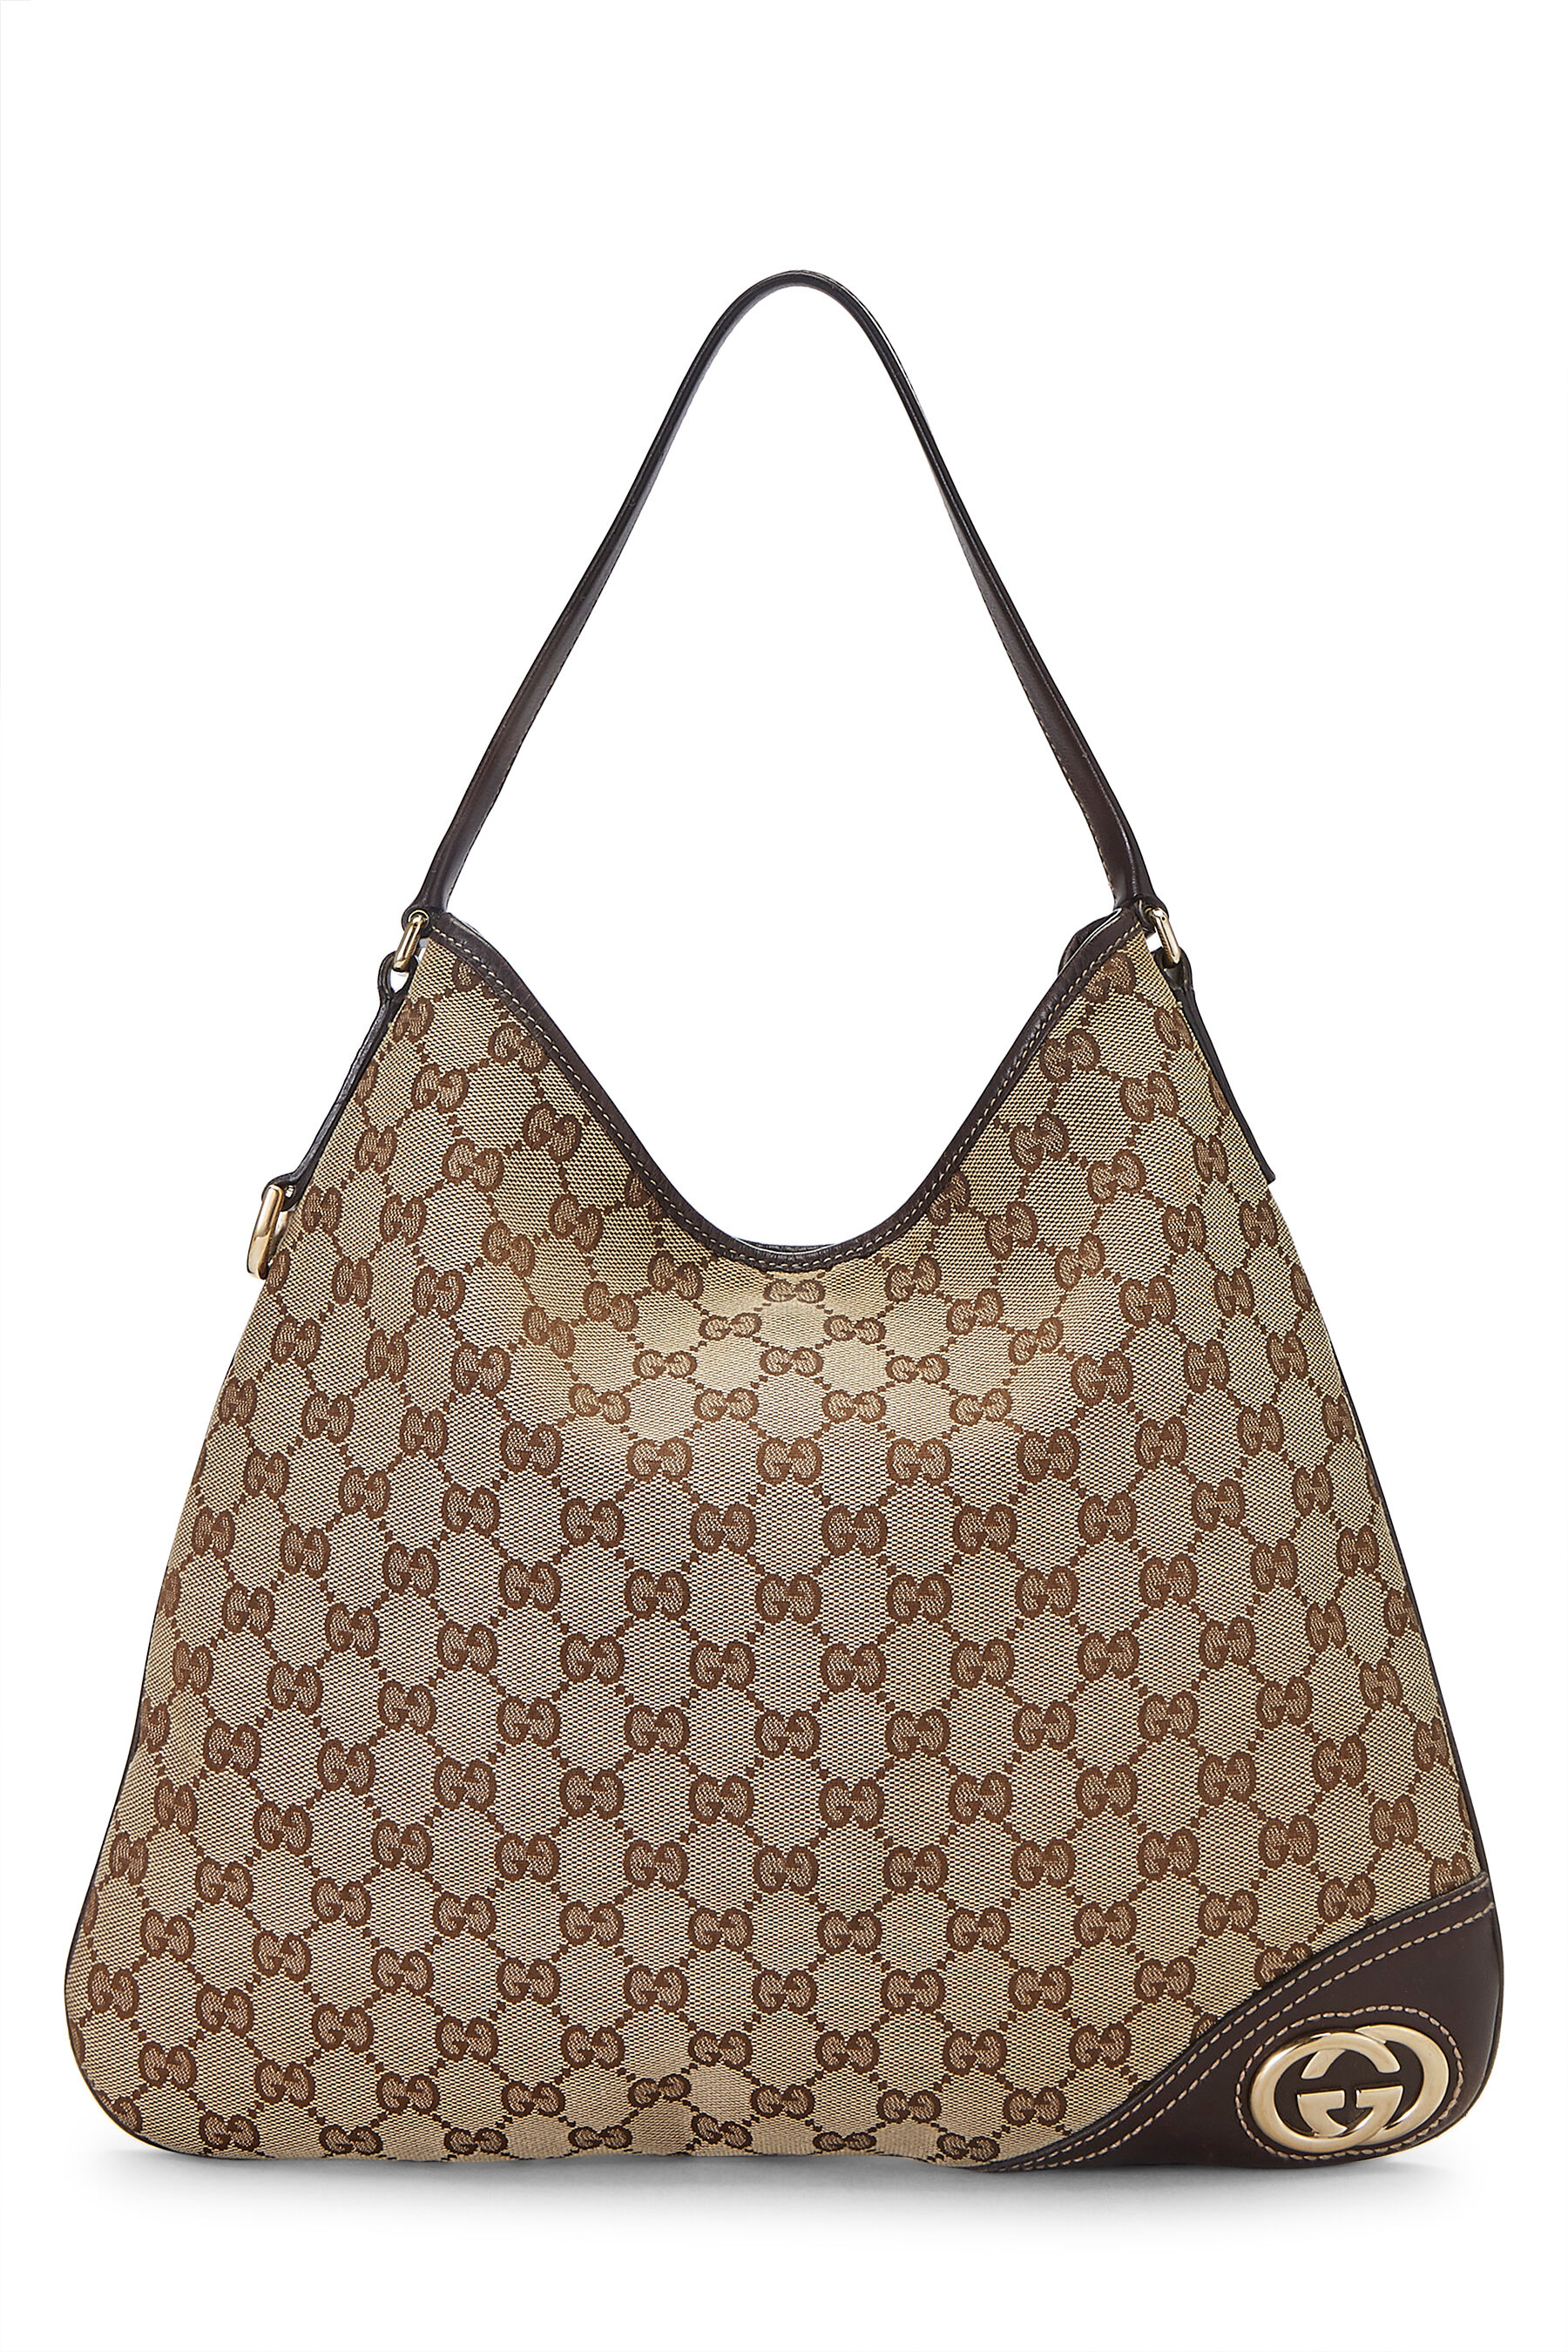 Gucci GG Canvas New Britt Hobo - Black Hobos, Handbags - GUC1359848